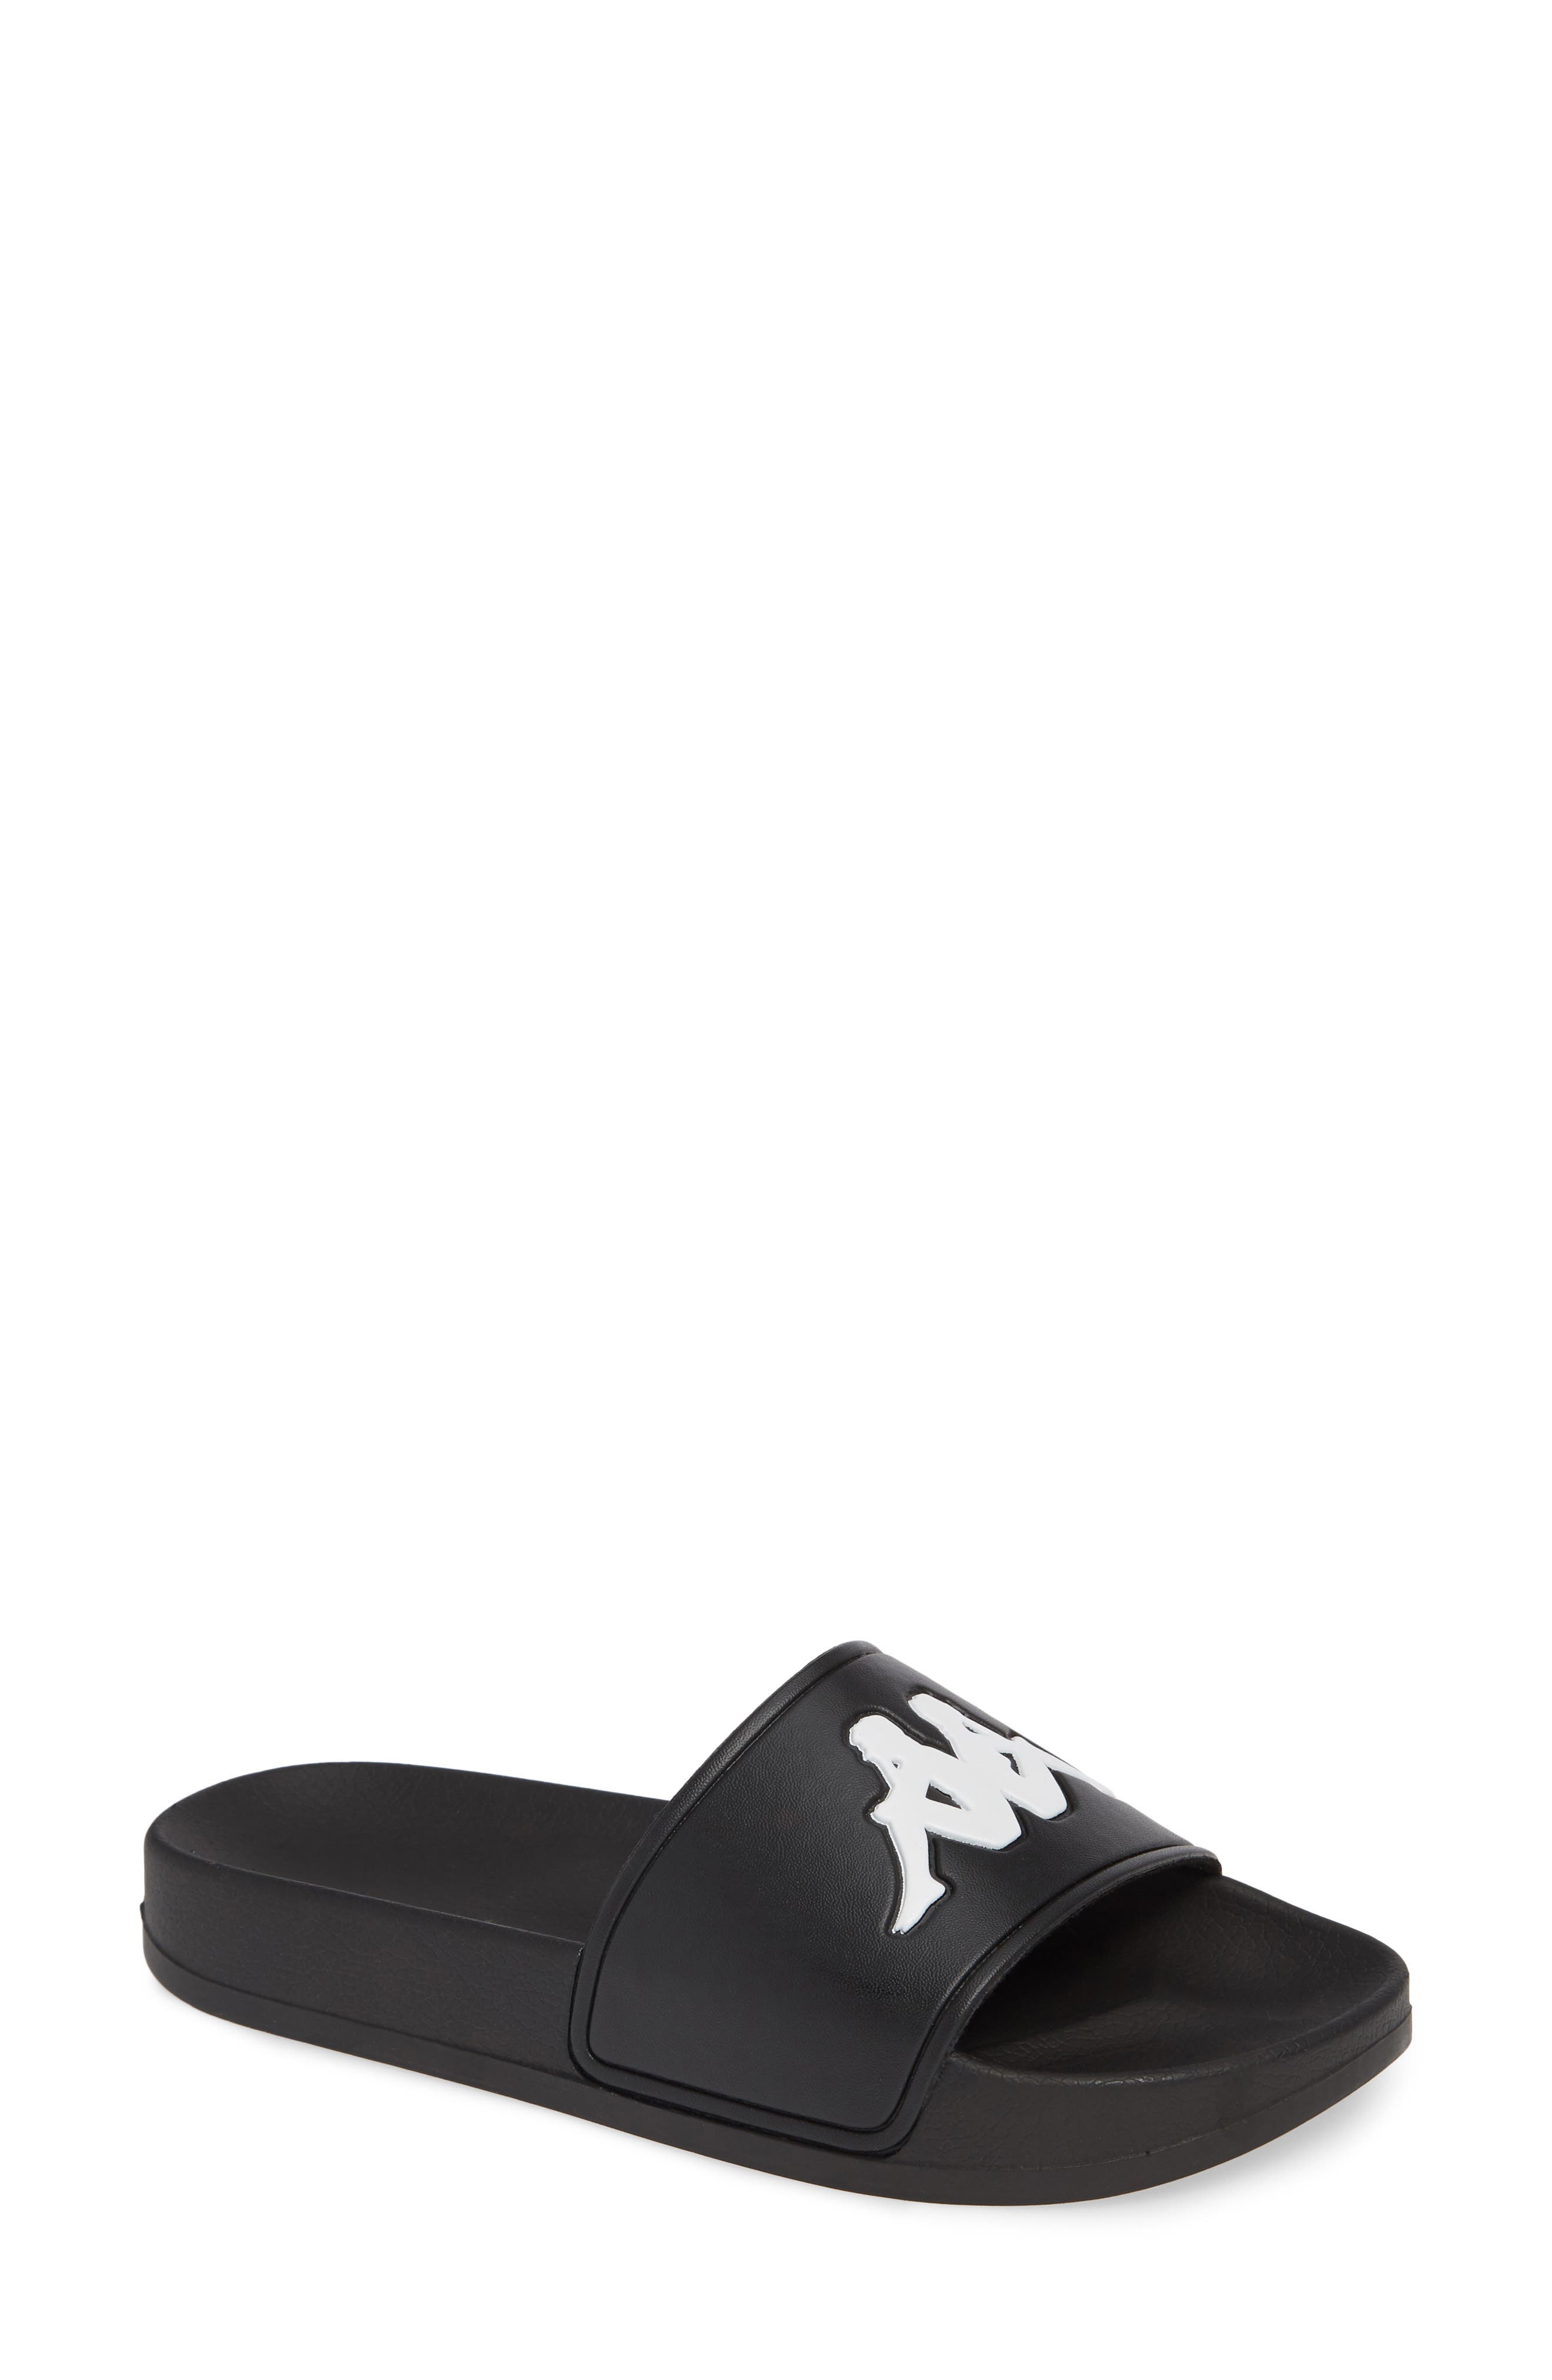 Kappa Active Logo Slide Sandal in Black/White at Nordstrom, Size 13